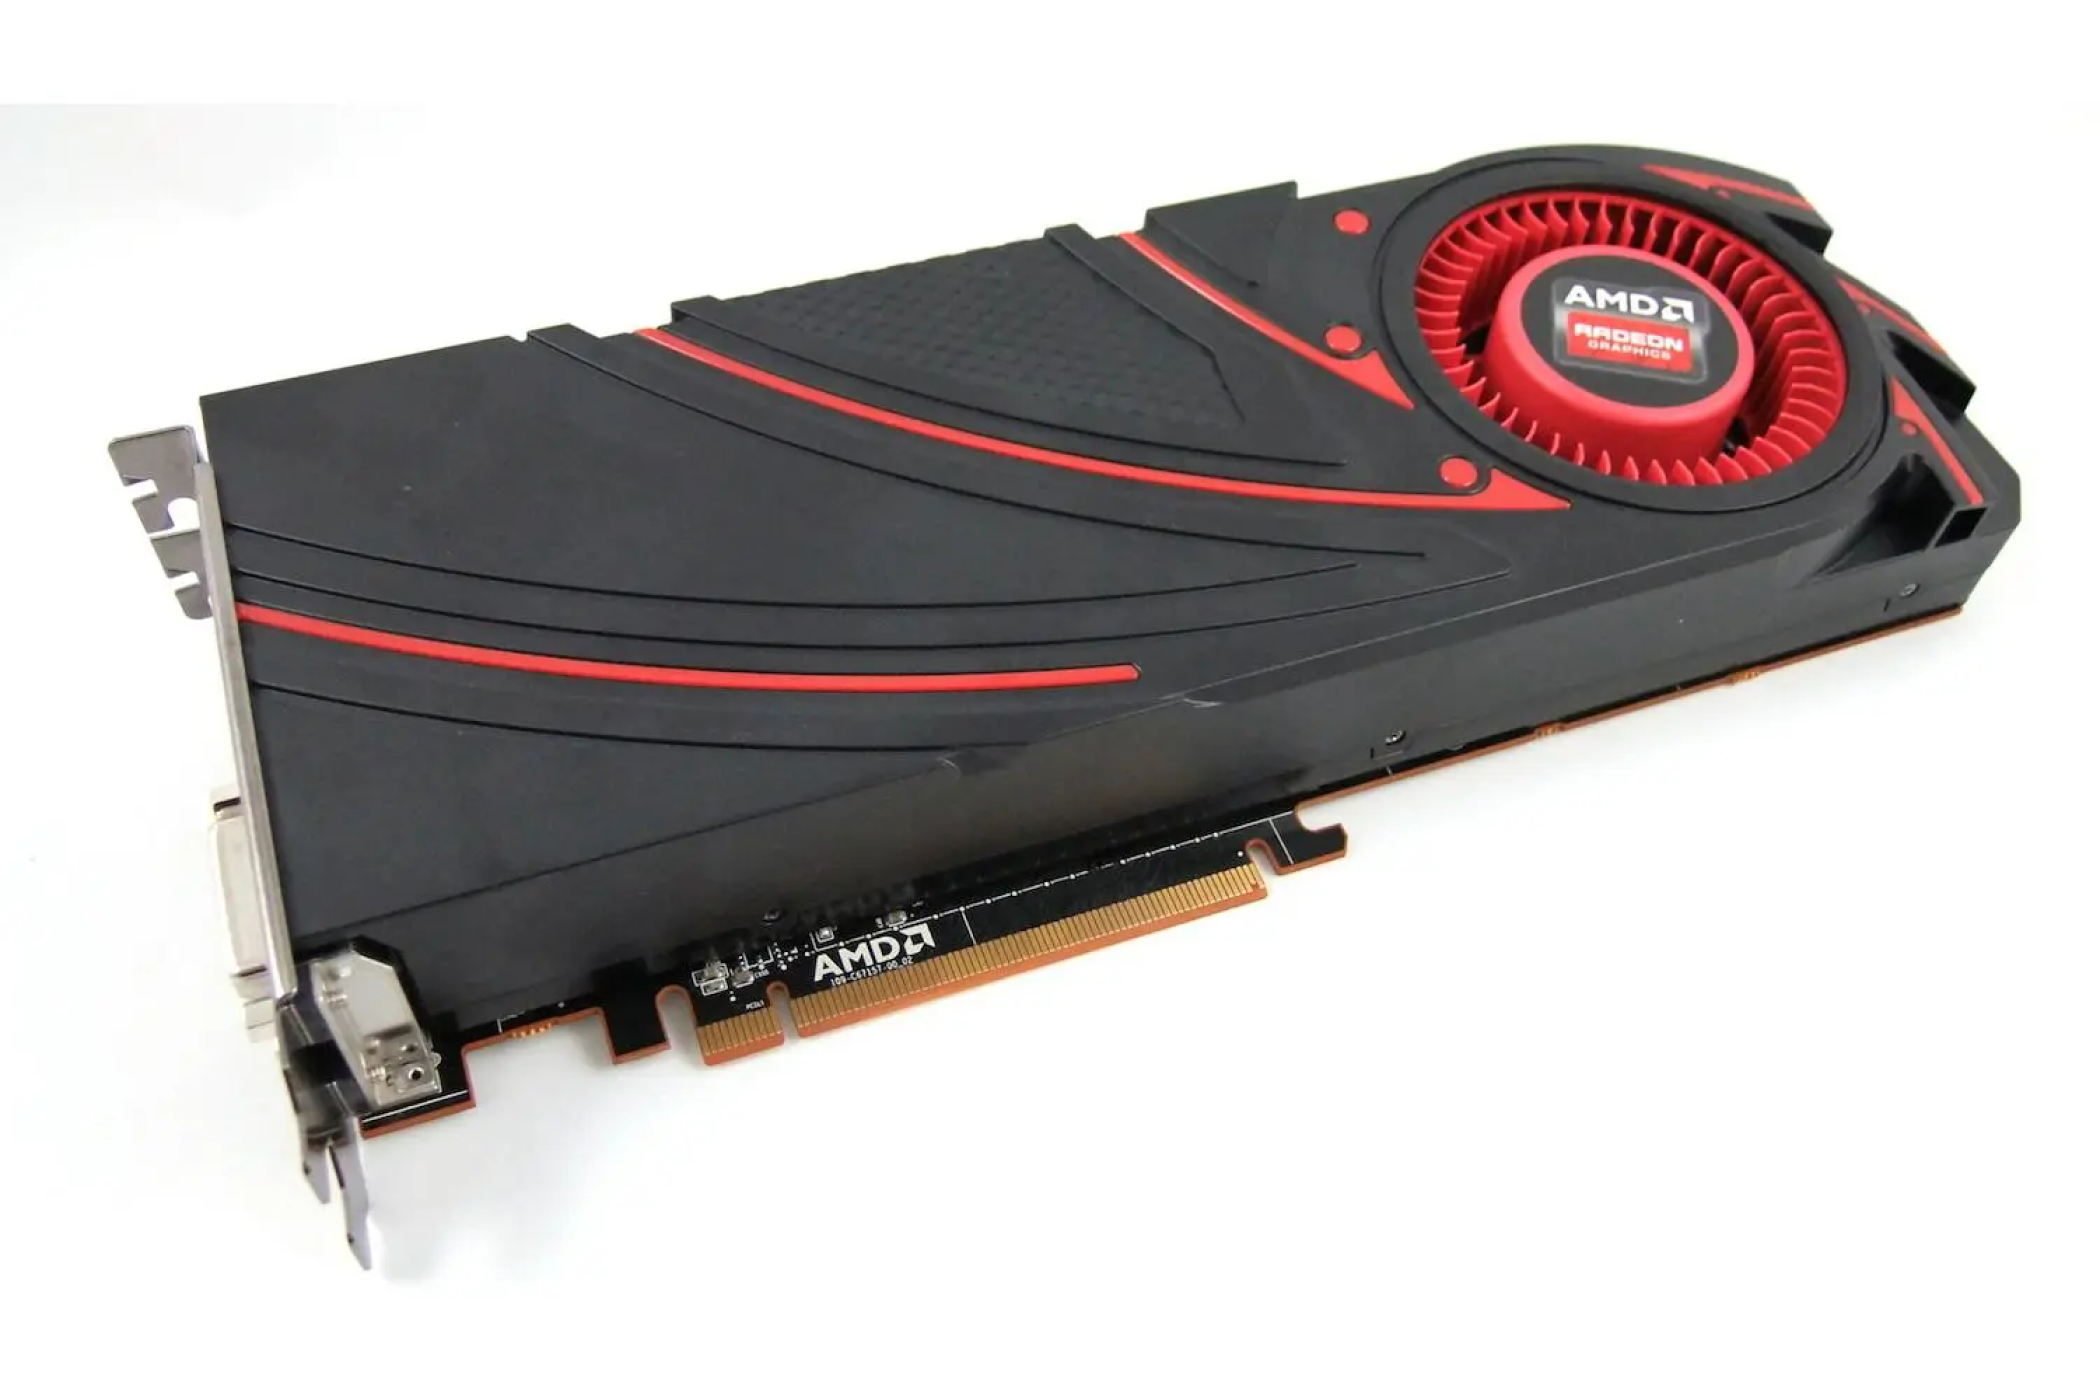 The AMD Radeon R9 290X GPU.